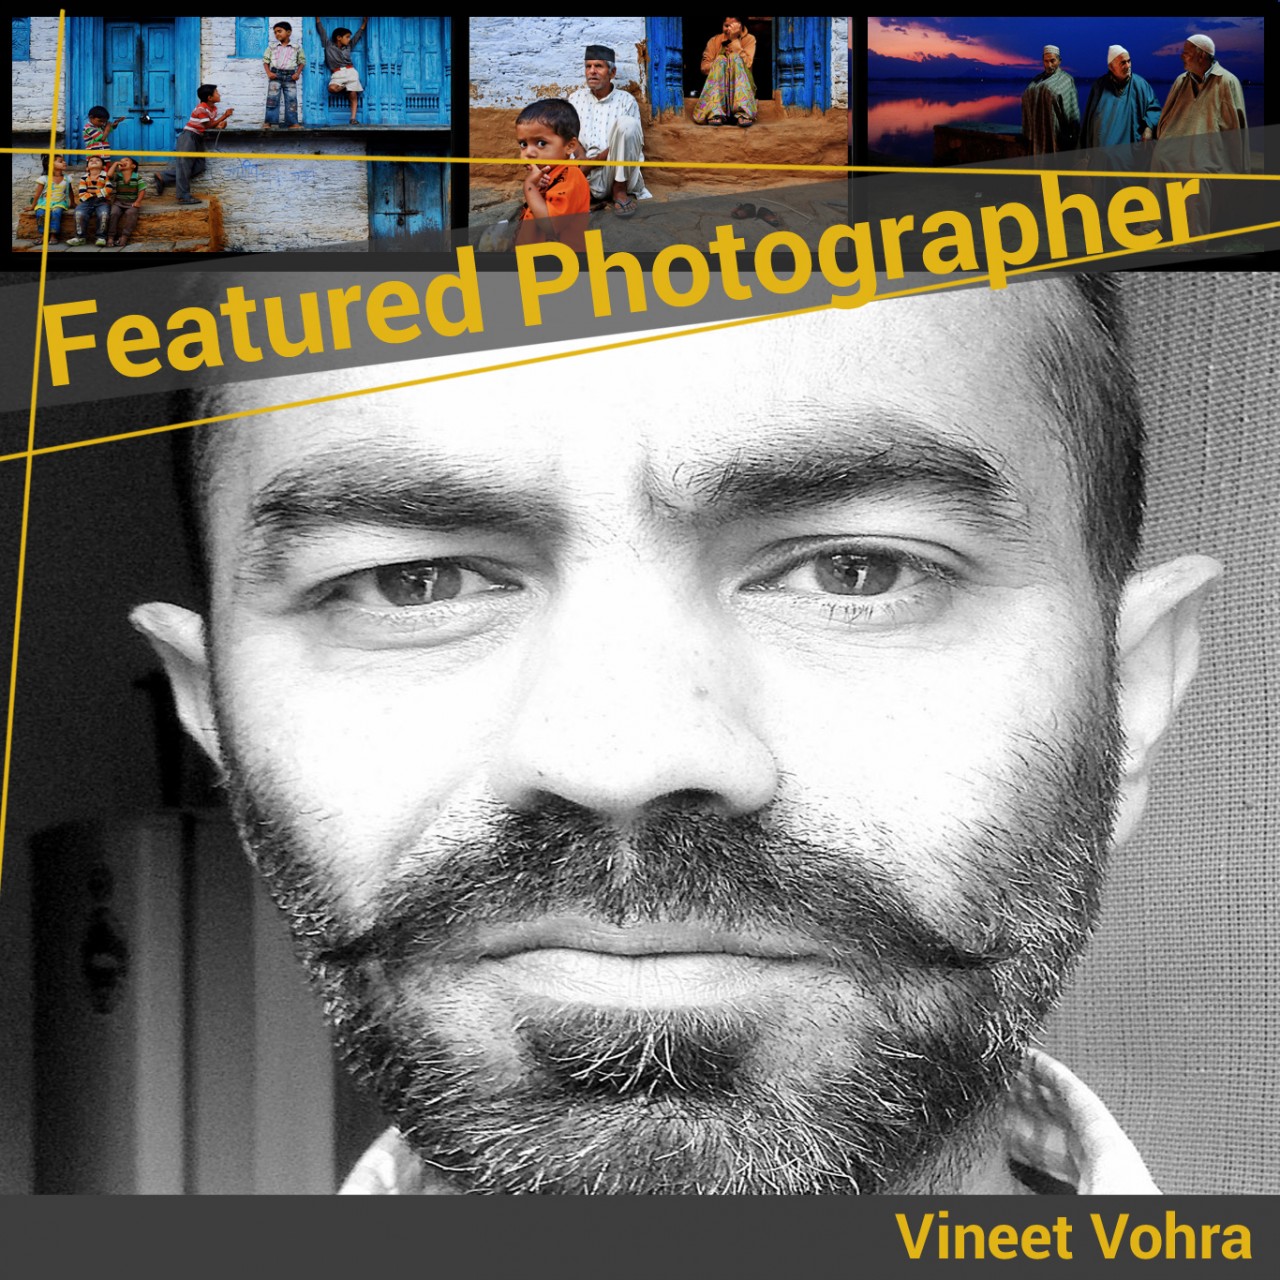  Featured Photographer Vineet Vohra